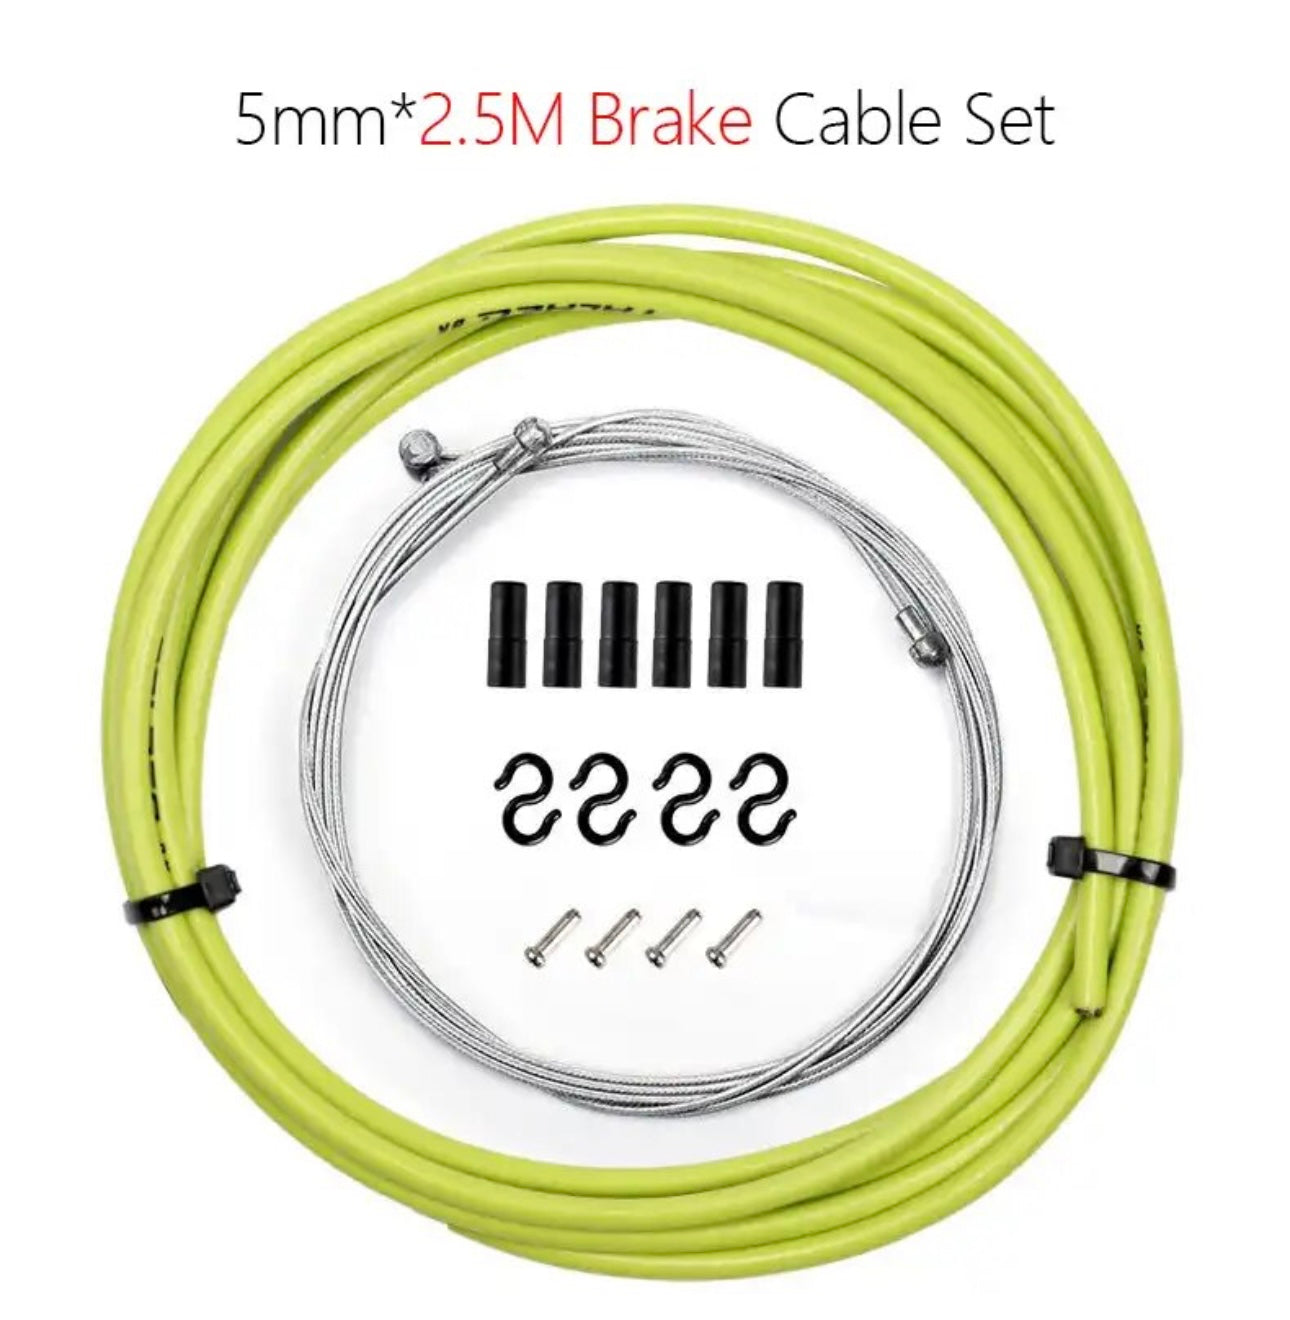 TRLREQ Universal Brake Cable